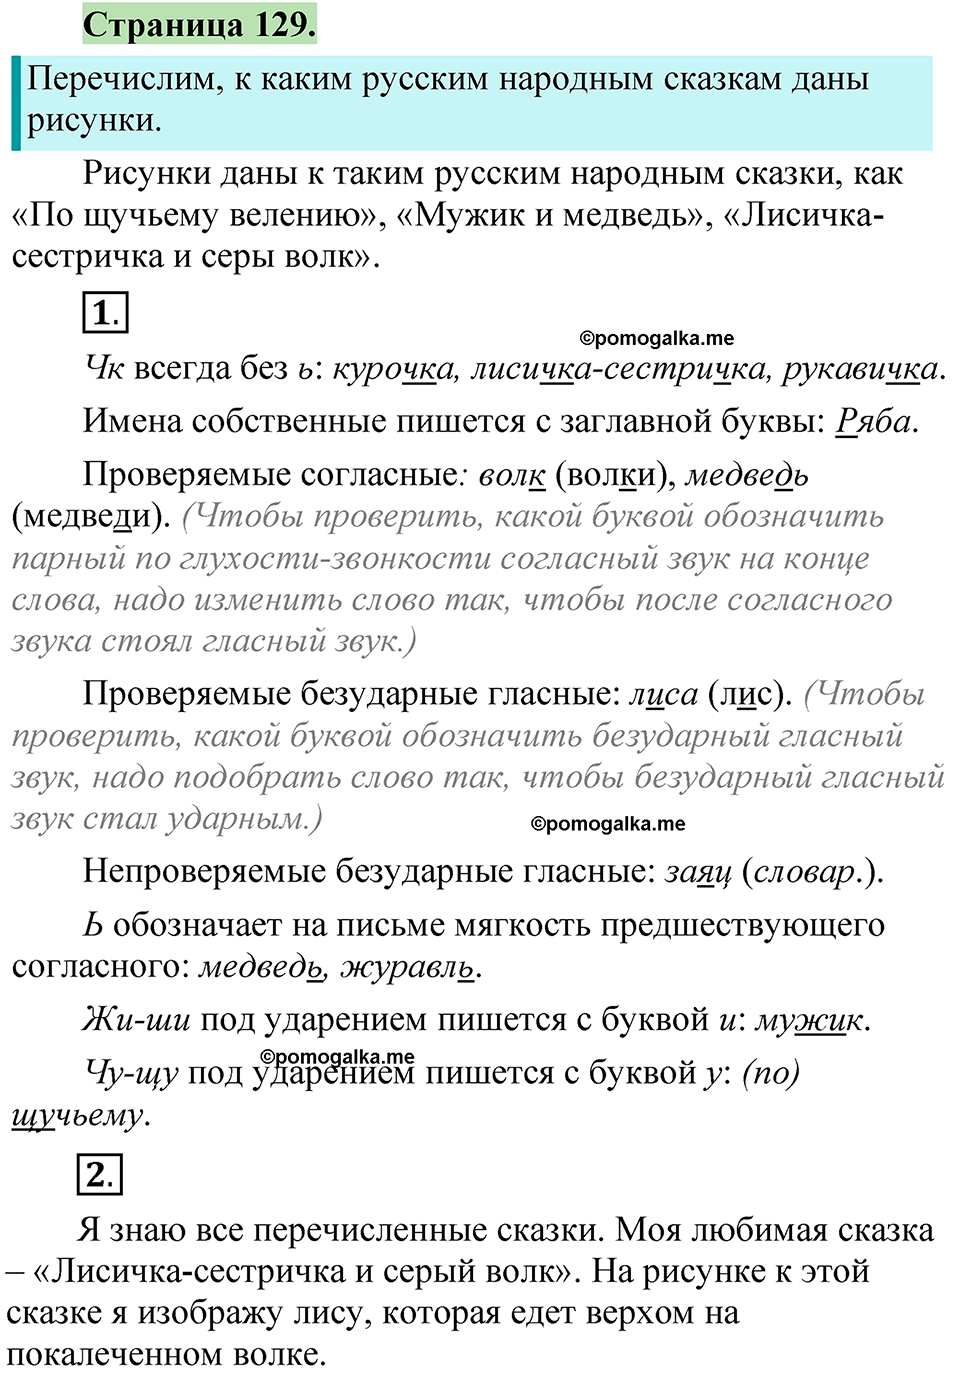 страница 129 русский язык 1 класс Канакина 2023